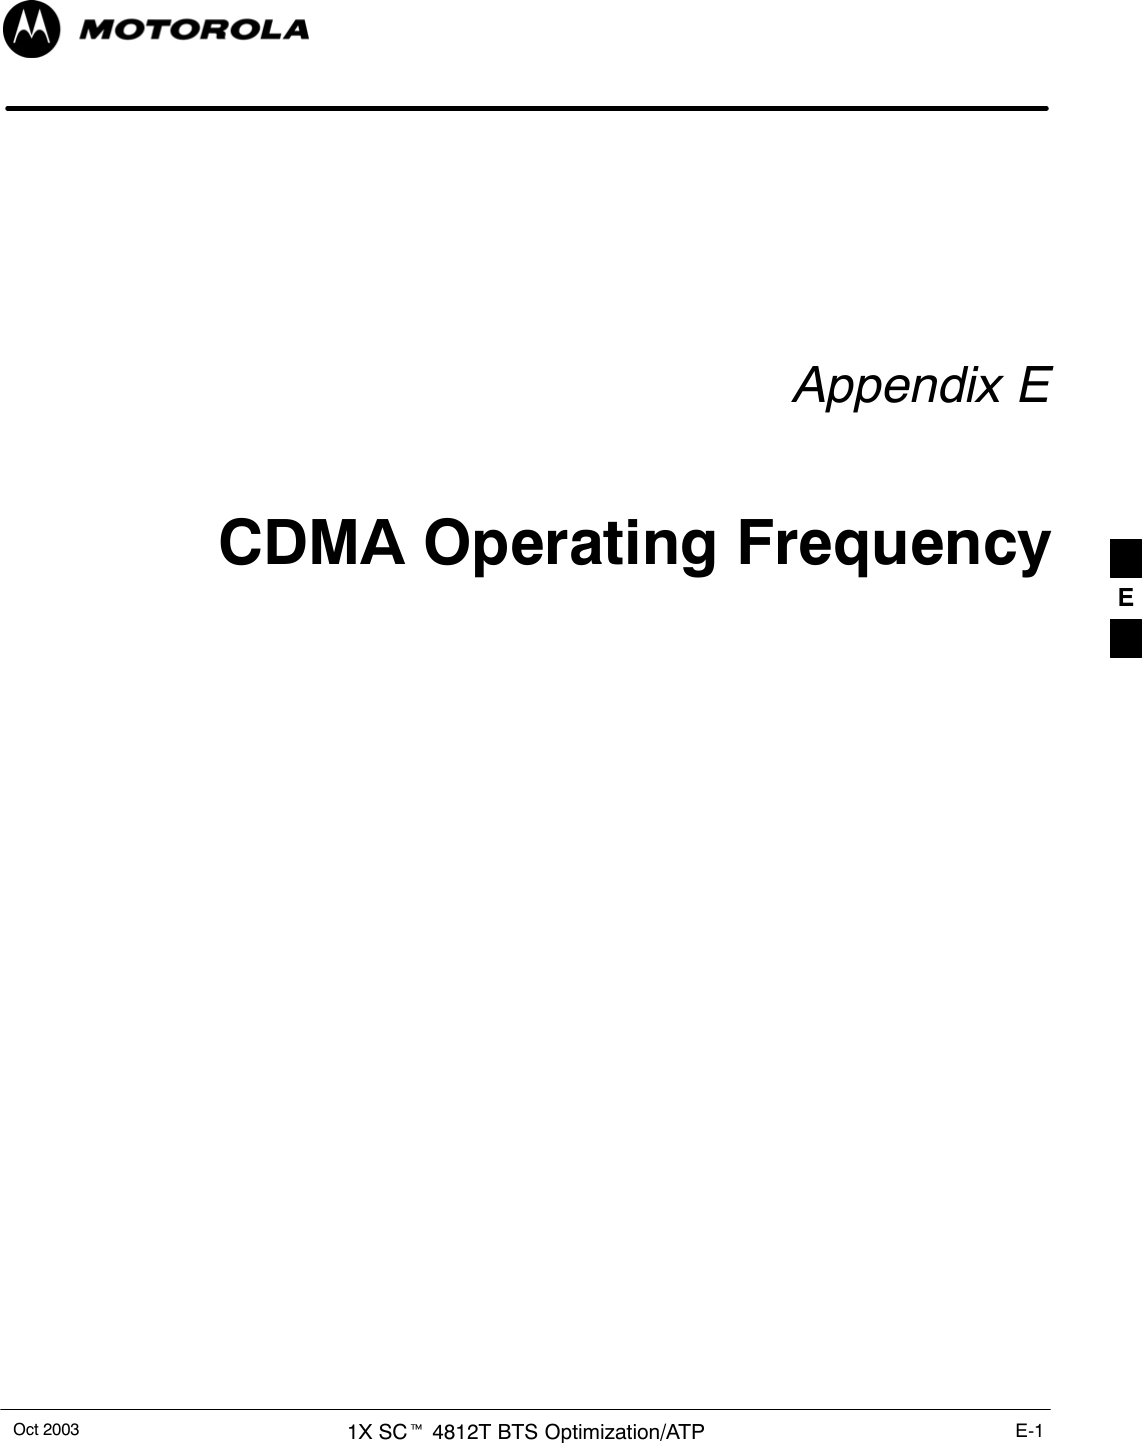 Oct 2003 1X SCt 4812T BTS Optimization/ATP E-1Appendix ECDMA Operating FrequencyE